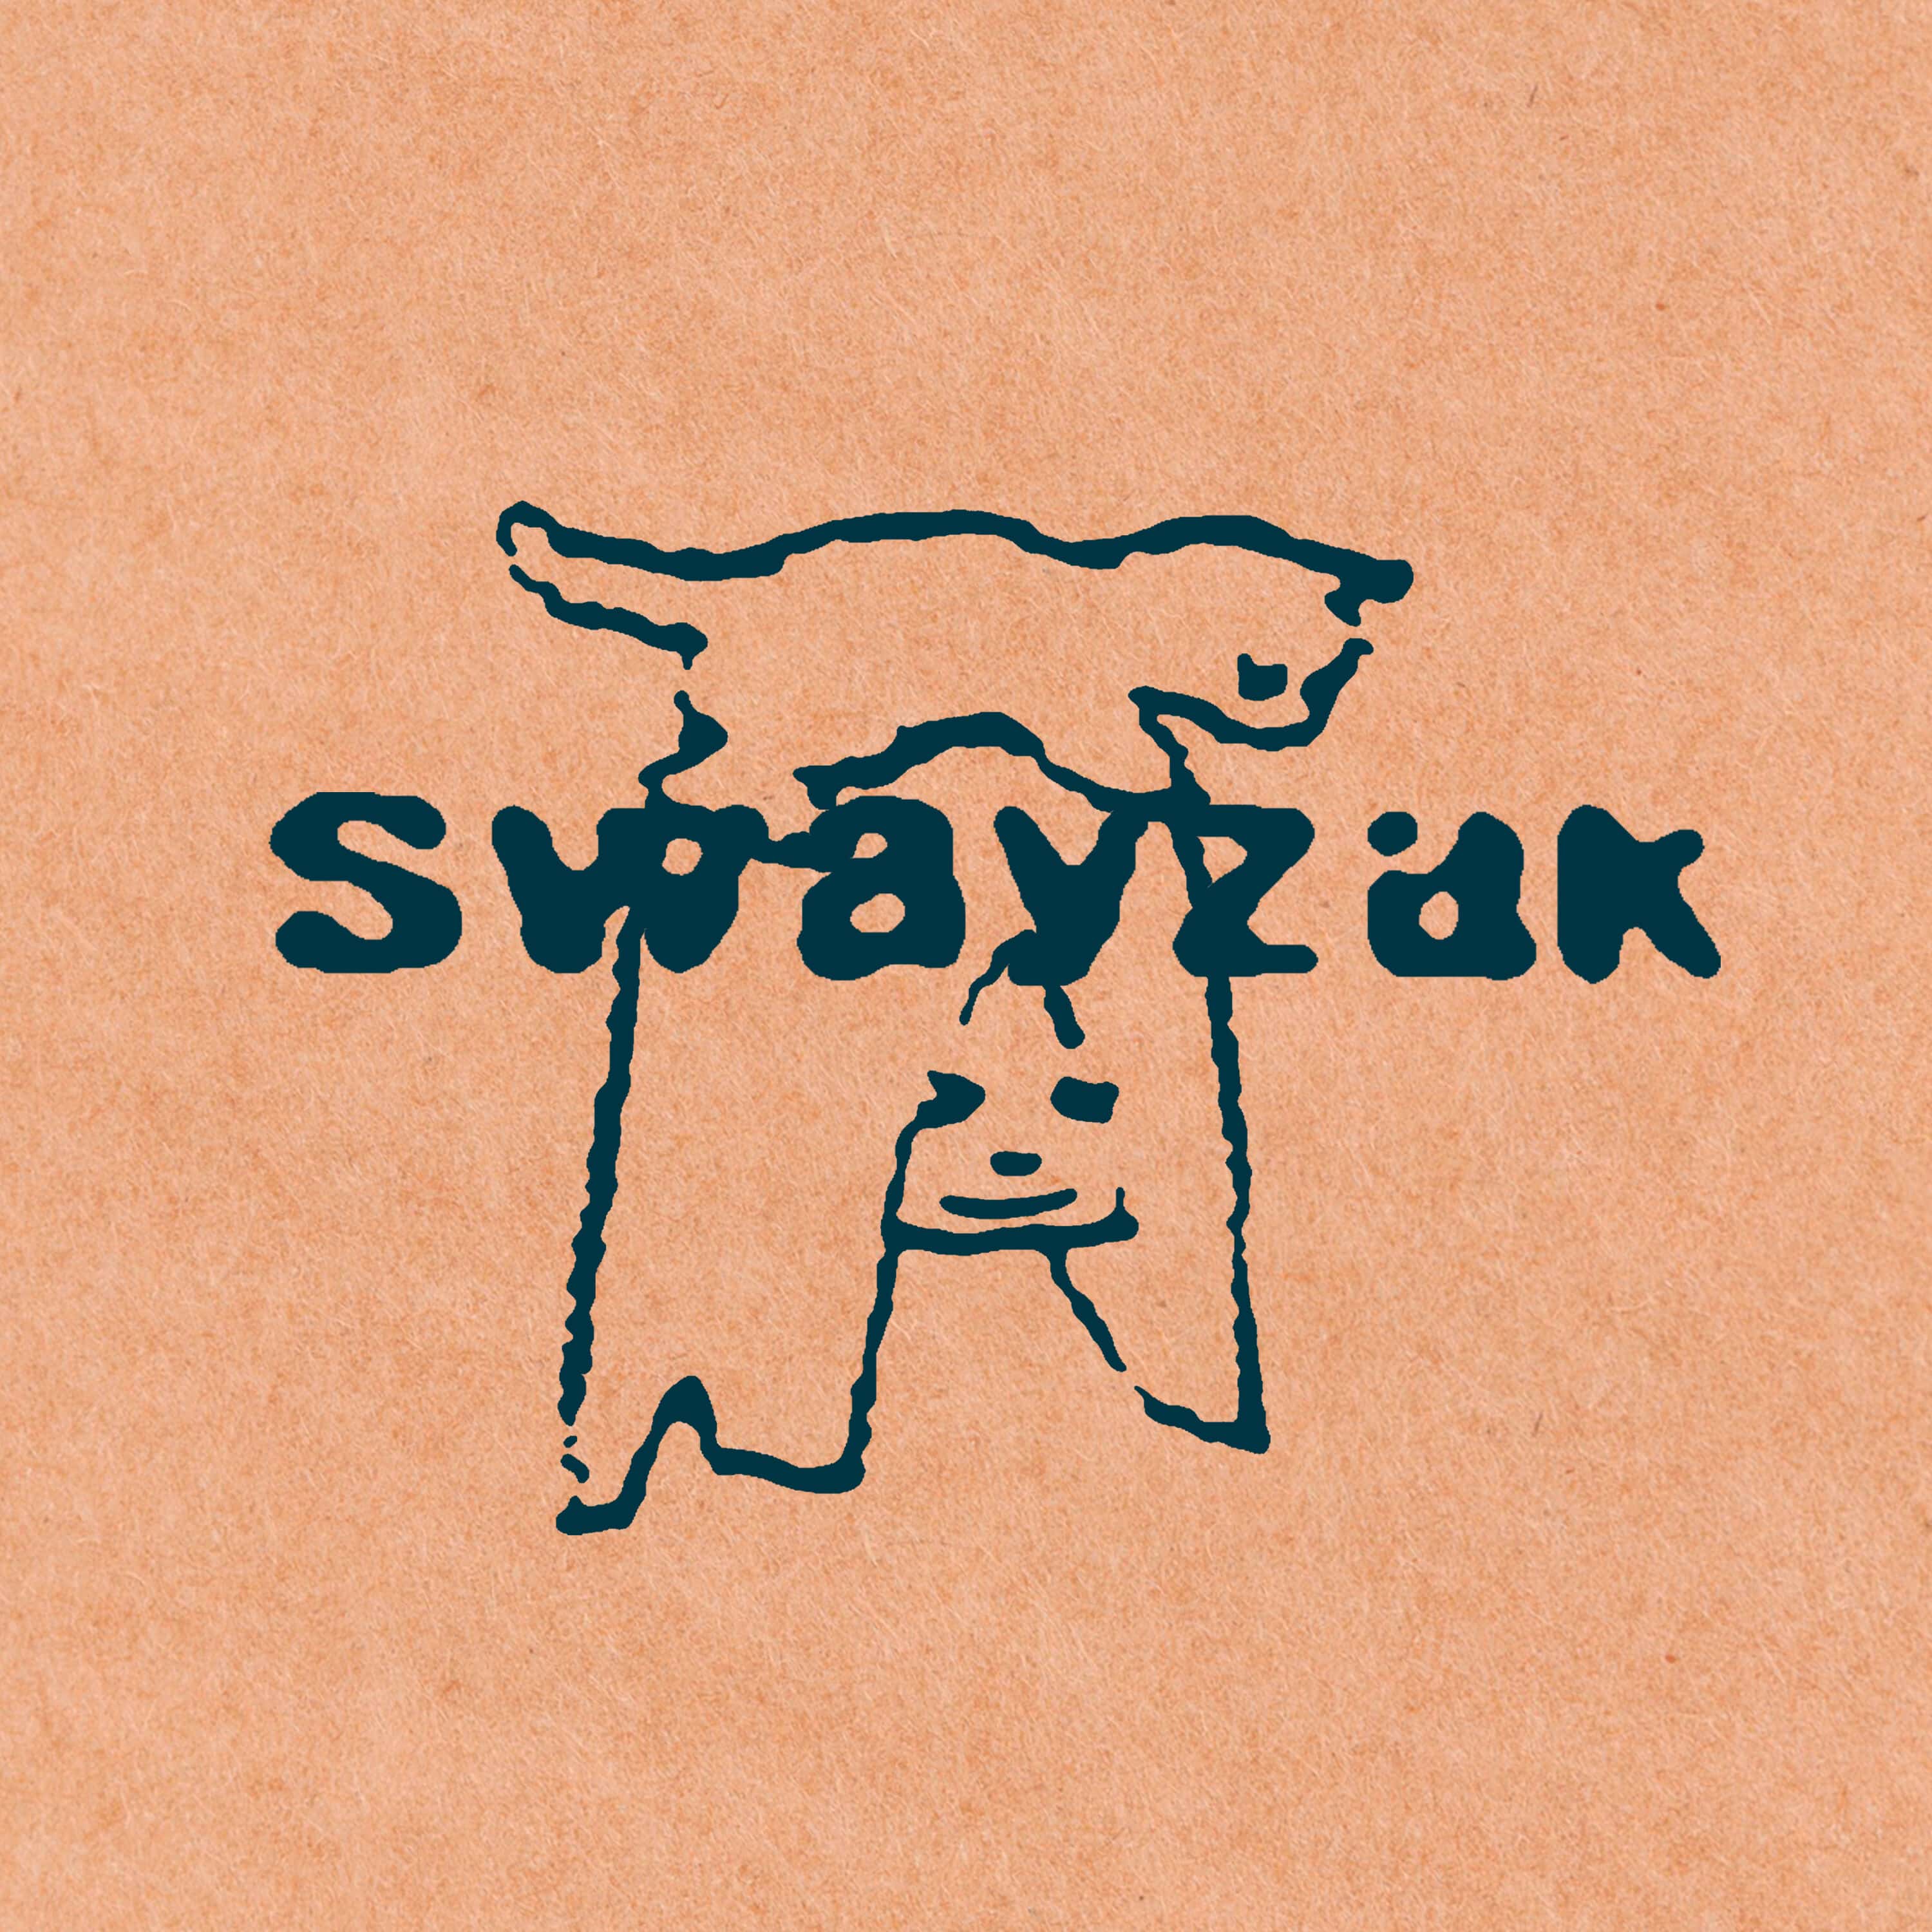 Download Swayzak - Snowboarding in Argentina on Electrobuzz